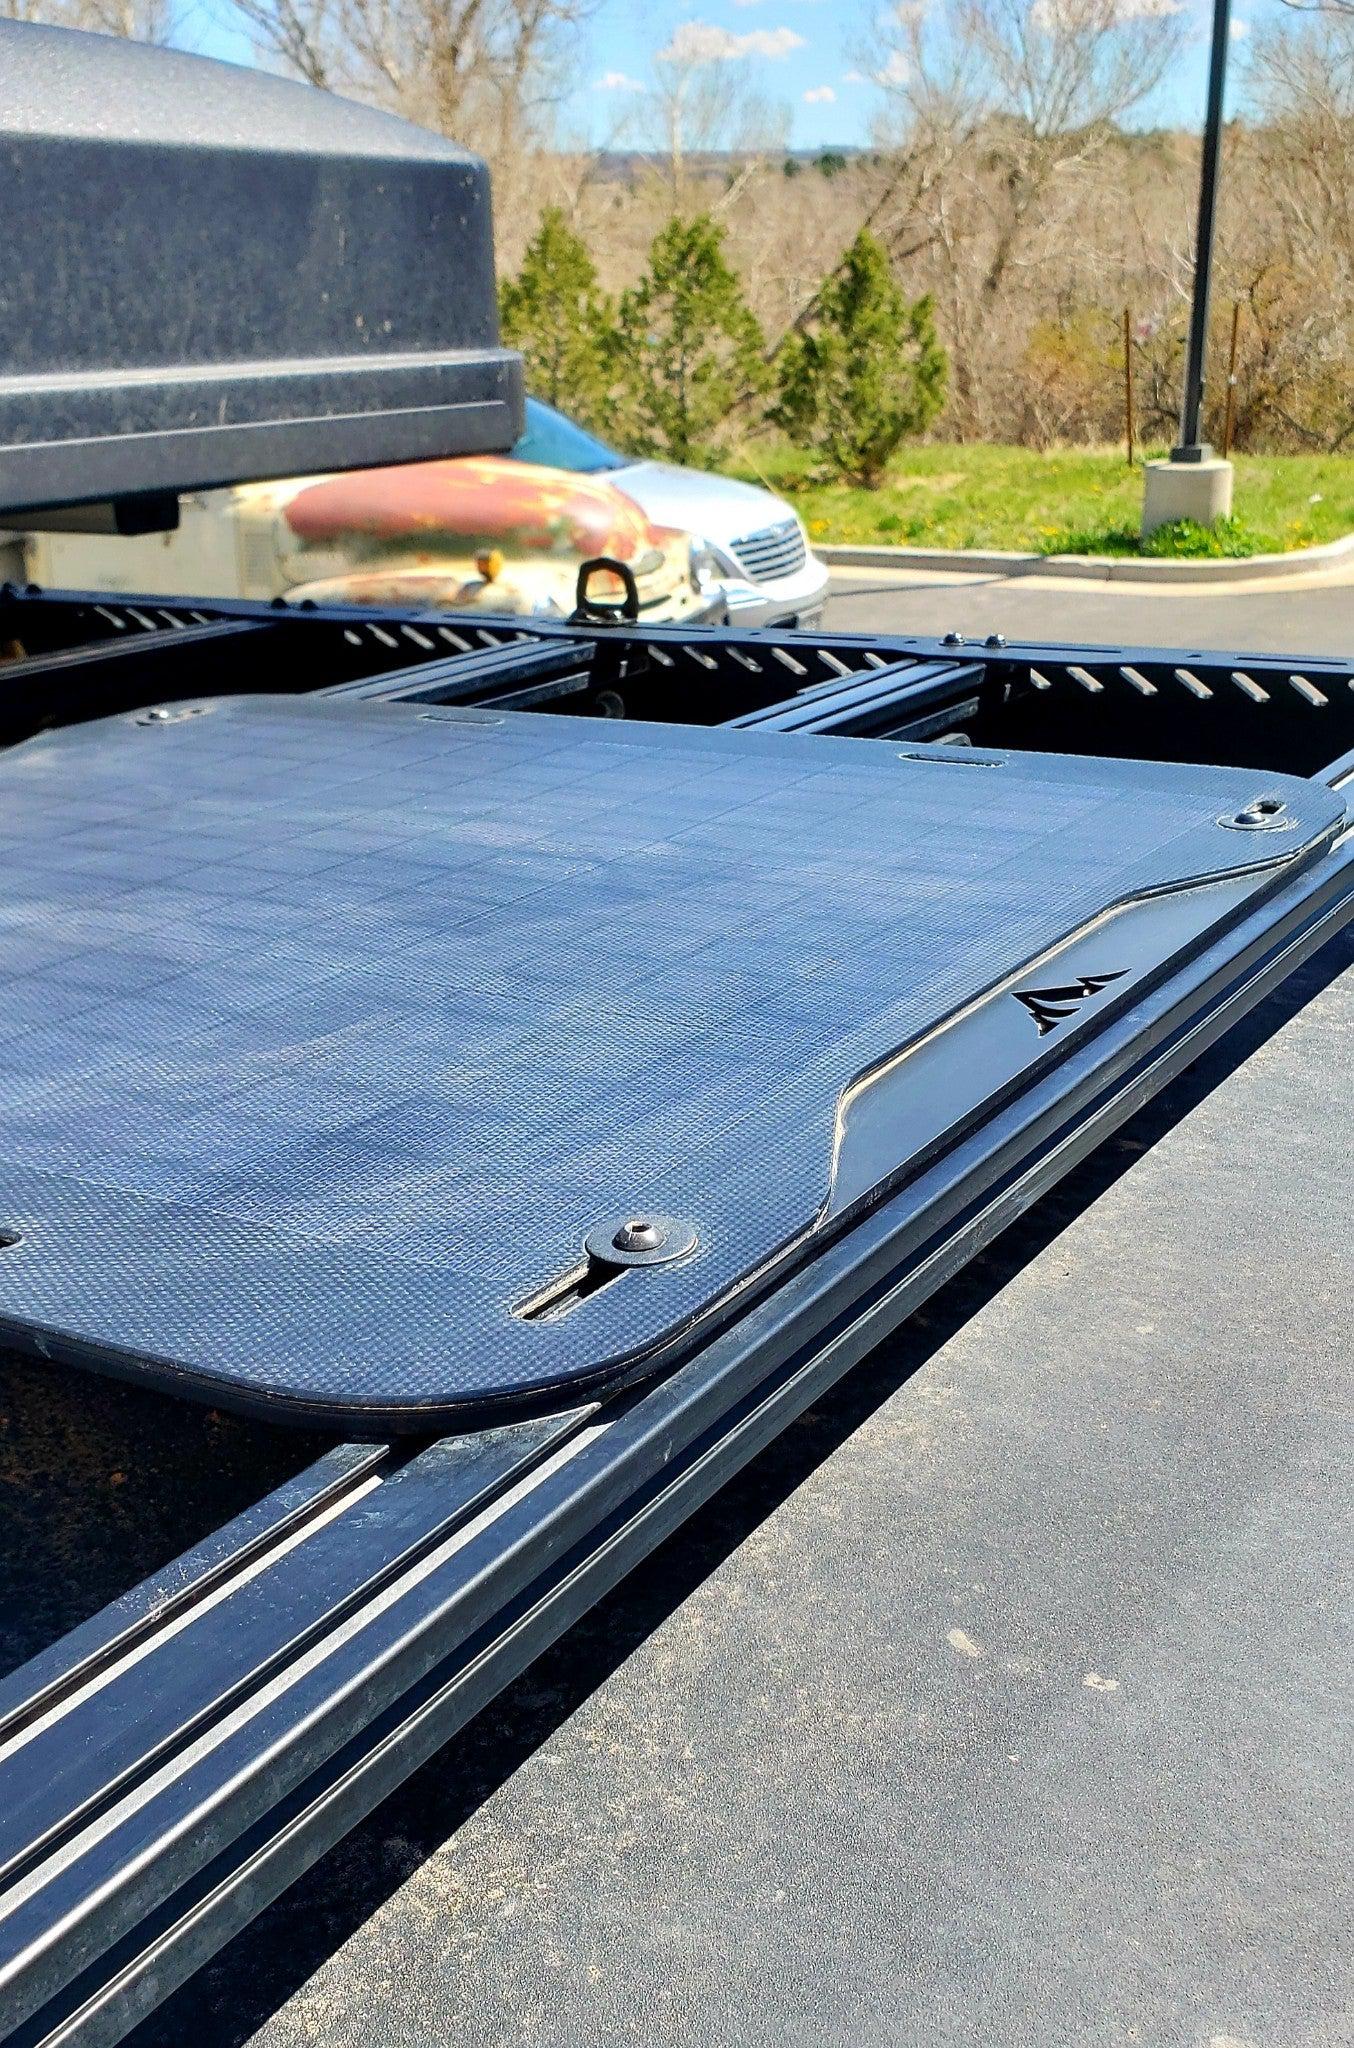 Cascadia dual 45 watt solar panels with controller-Cascadia-upTOP Overland